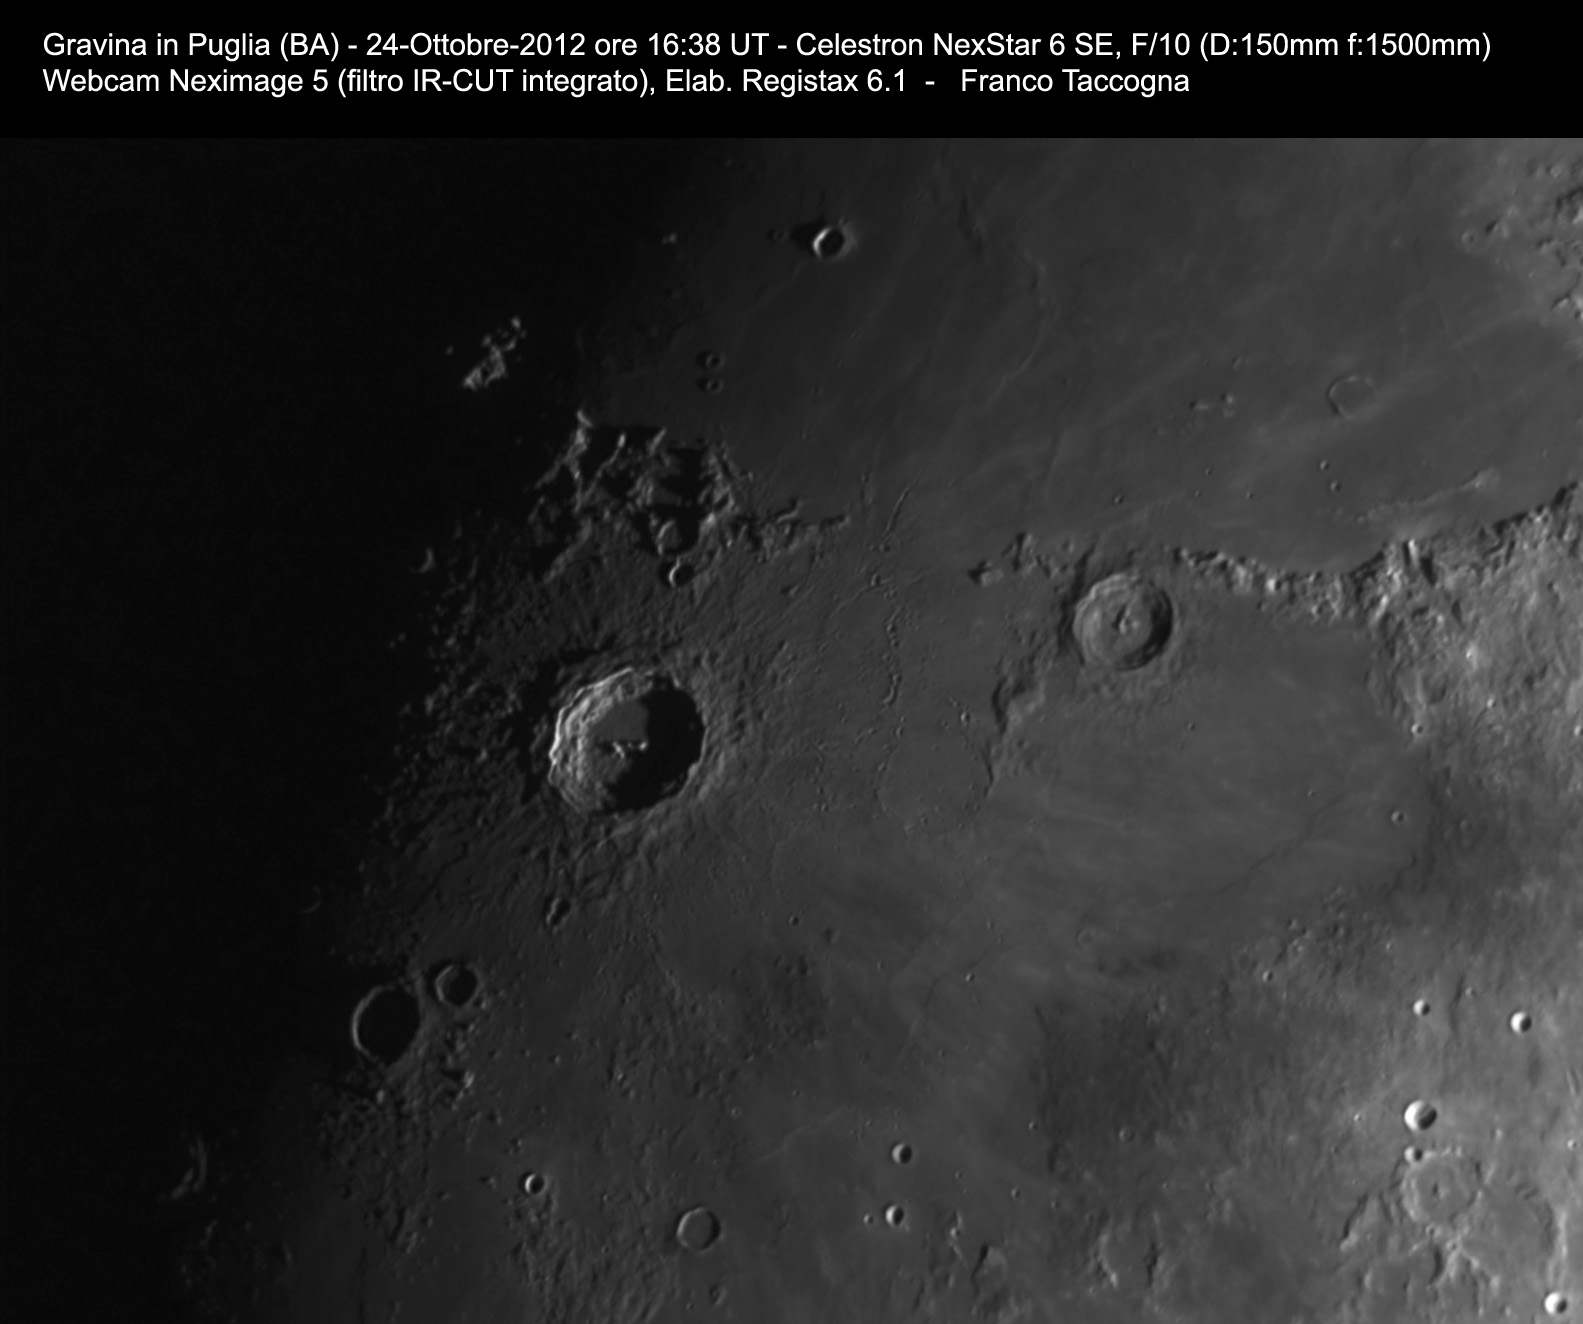 Copernicus 20121024 1638 tacc.jpg